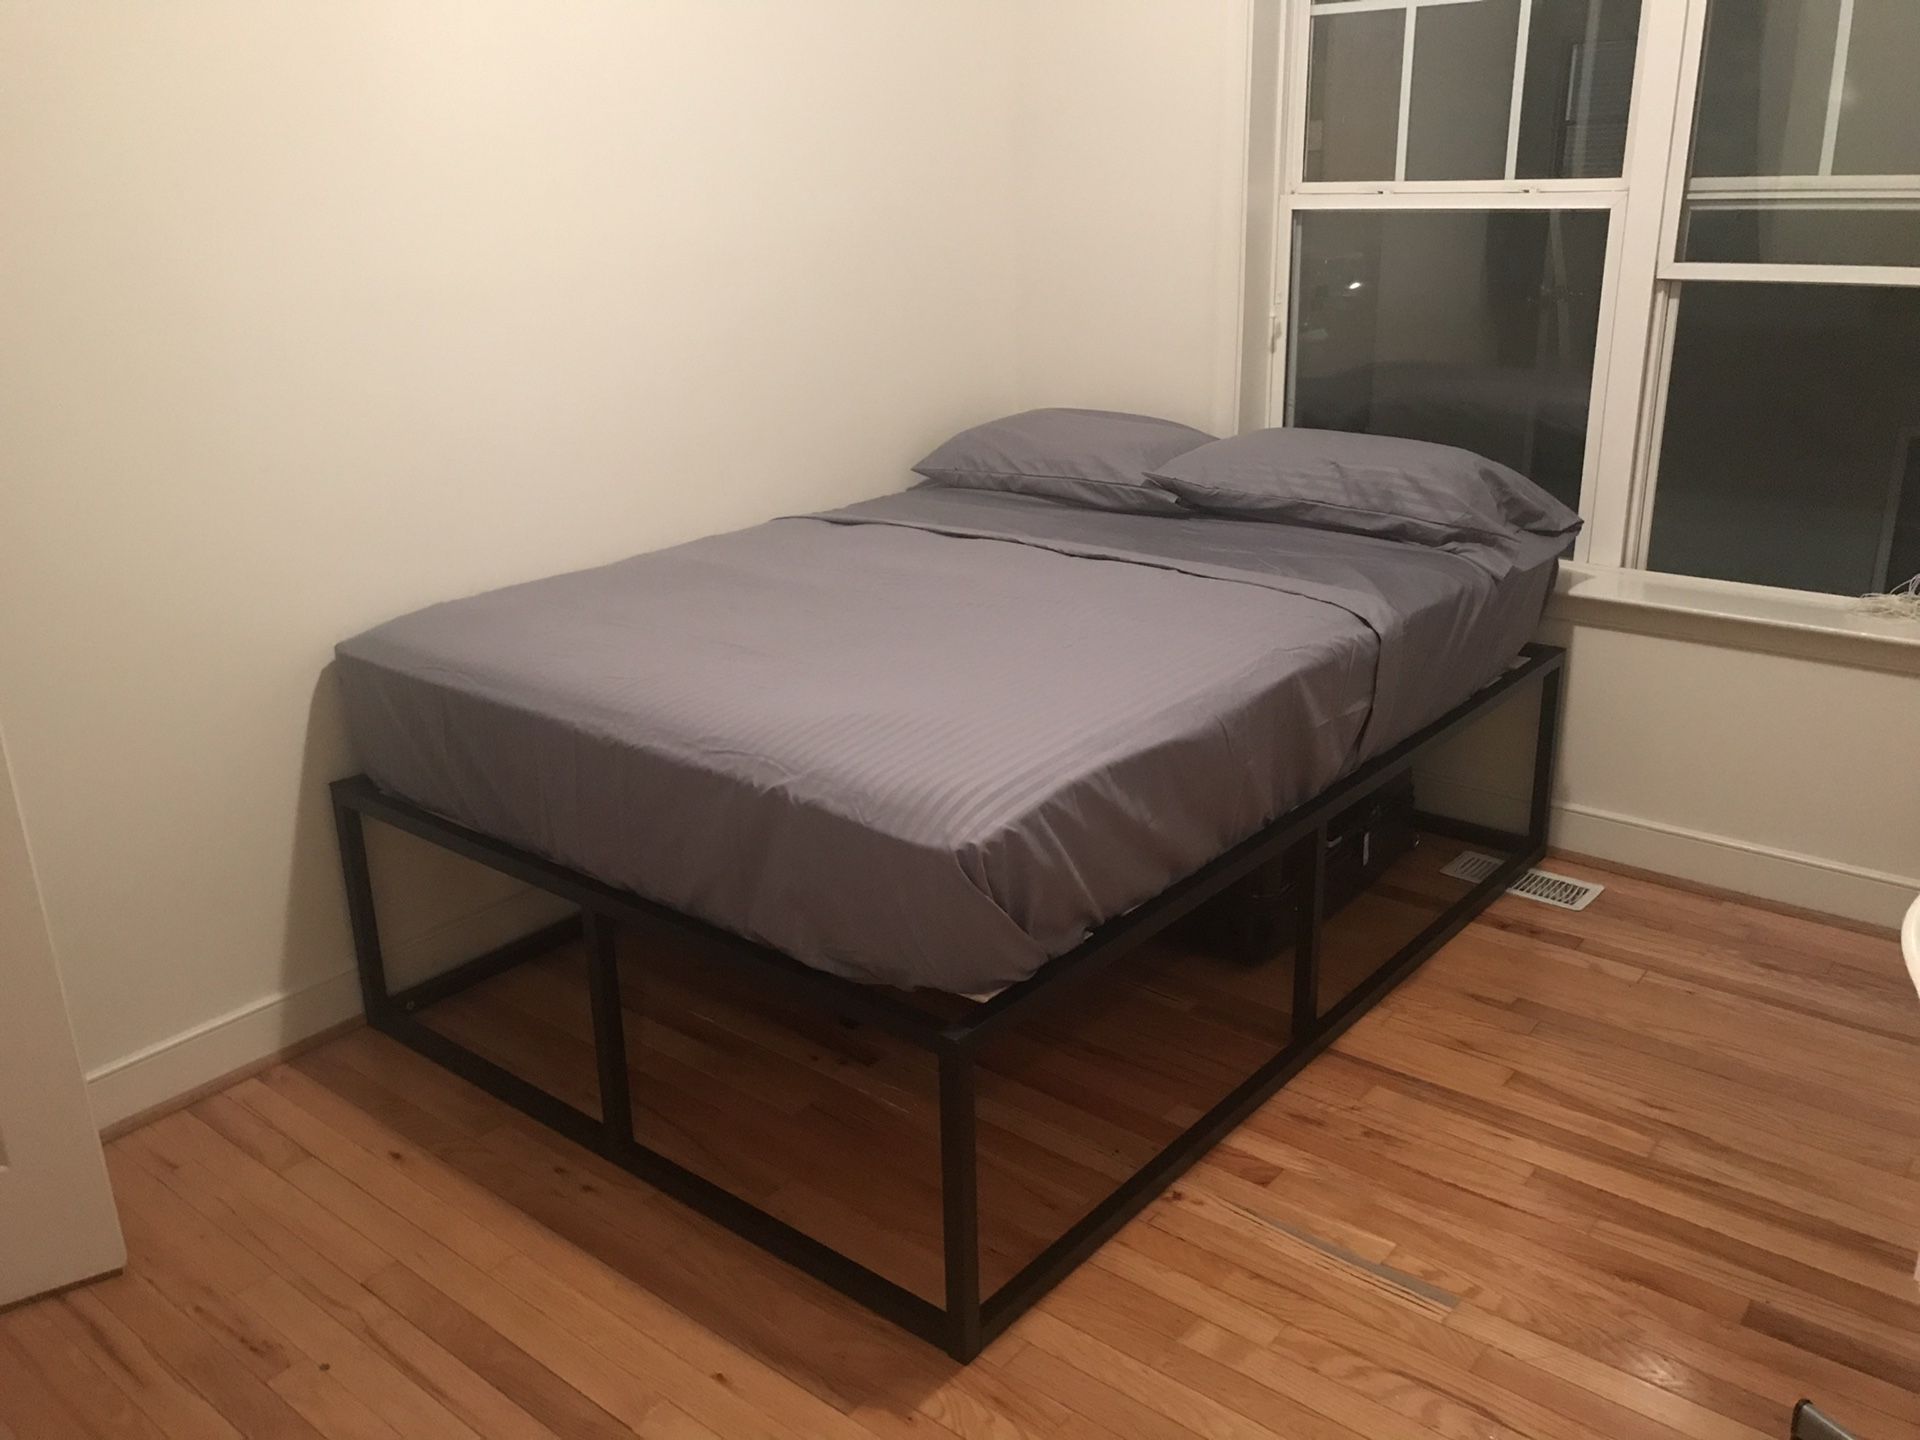 Full size bed (mattress + frame) Zinus